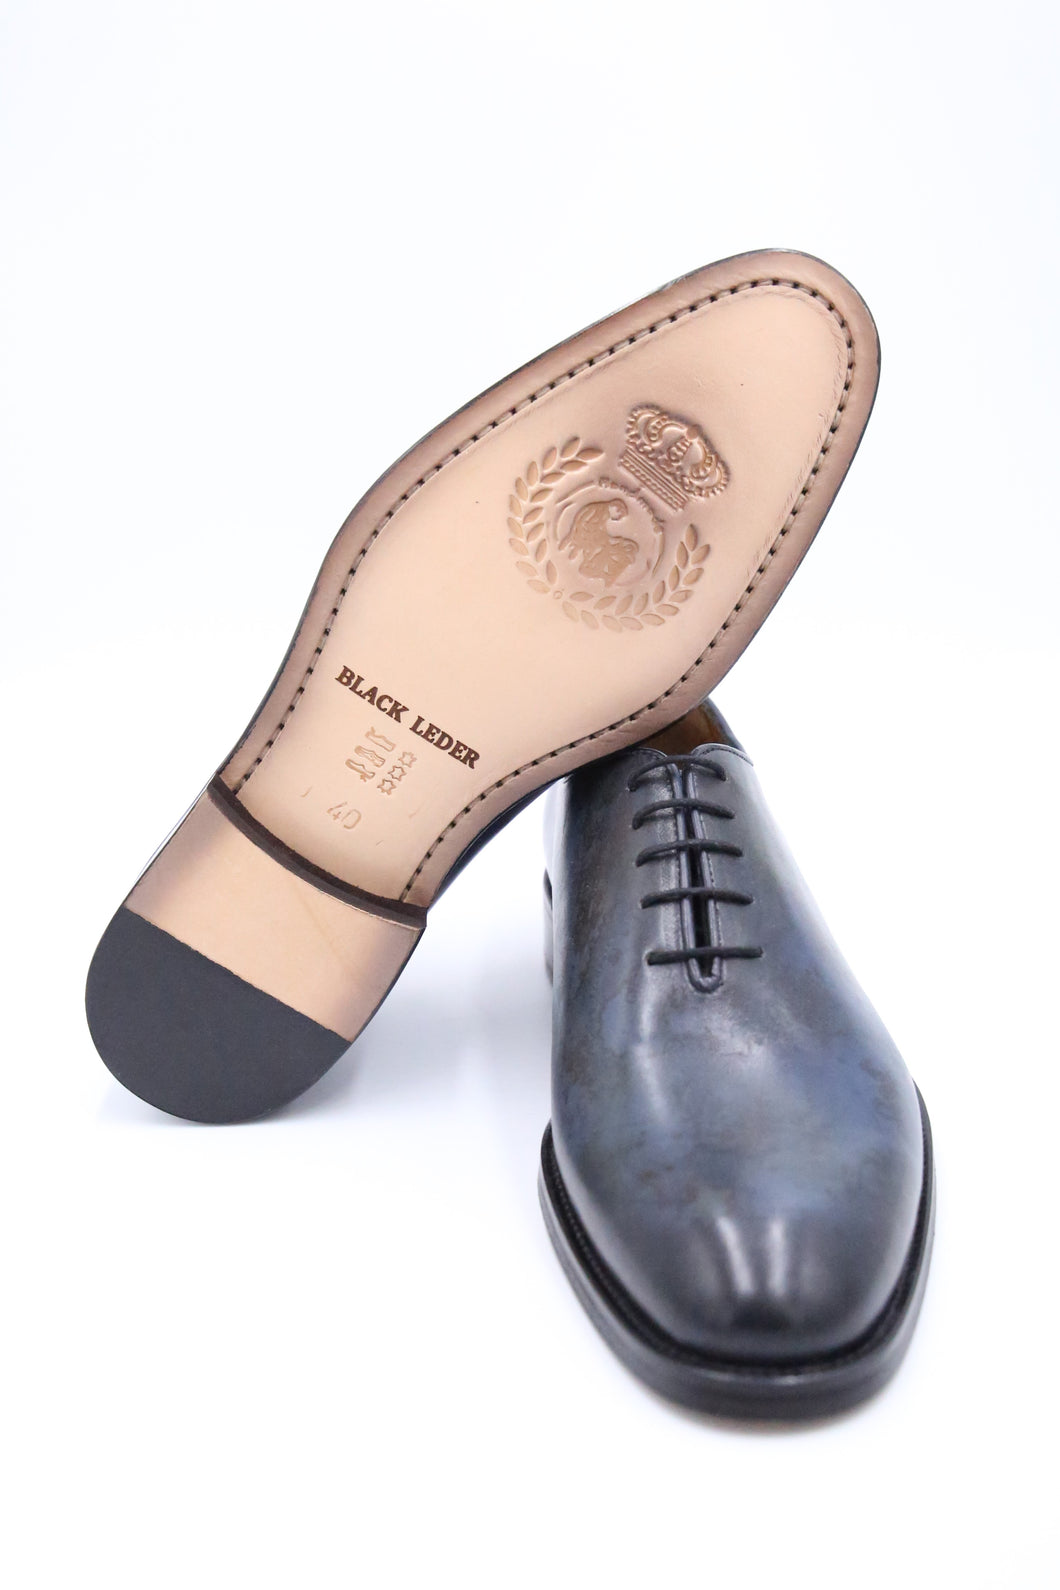 Bedruckte Herren Leder Schuhe Elegant Klassisch für jeden Anlass